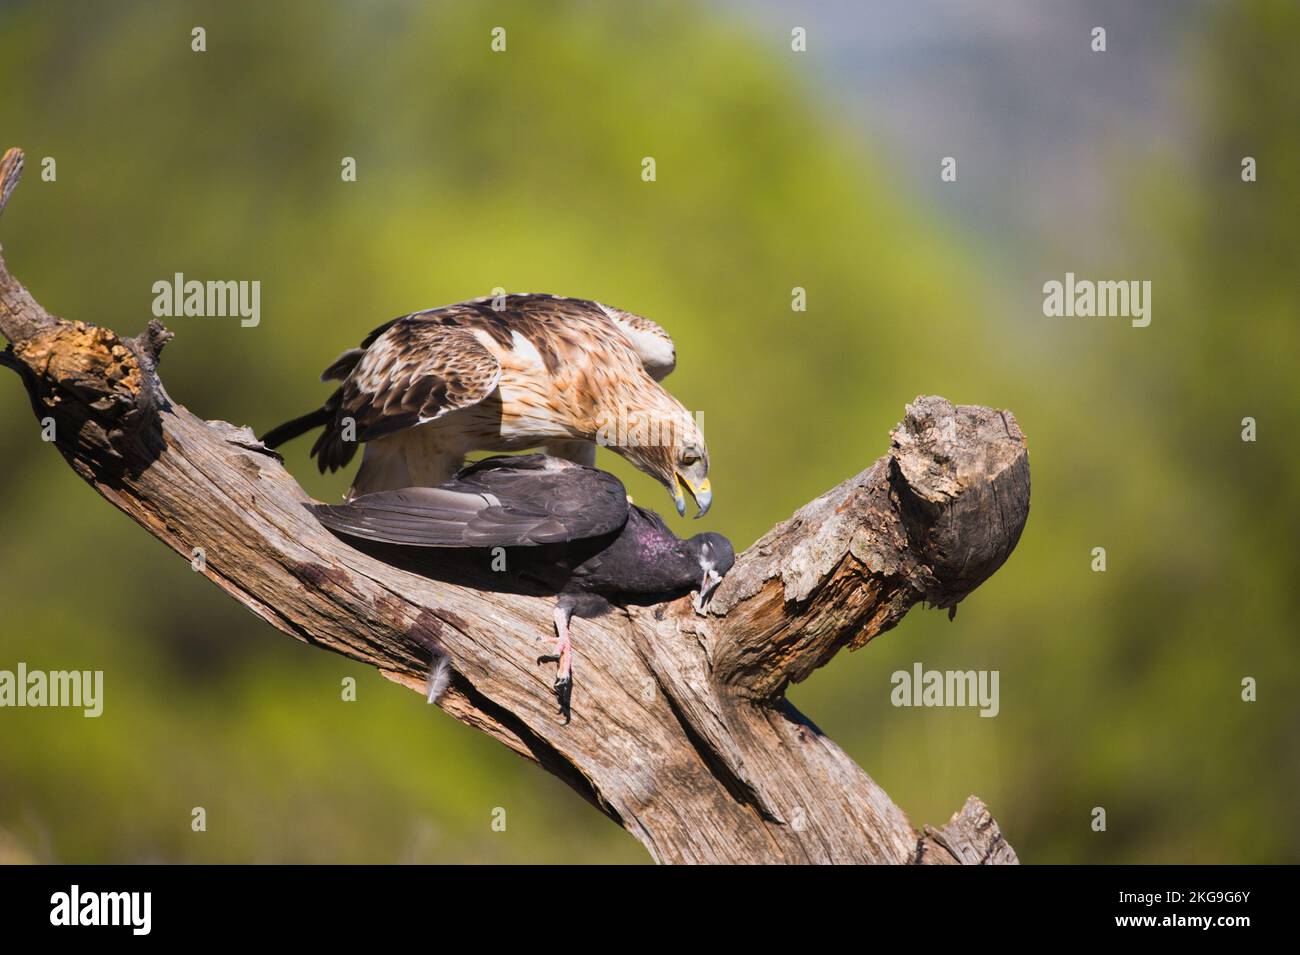 Aguila calzada alimentandose con una paloma Stock Photo